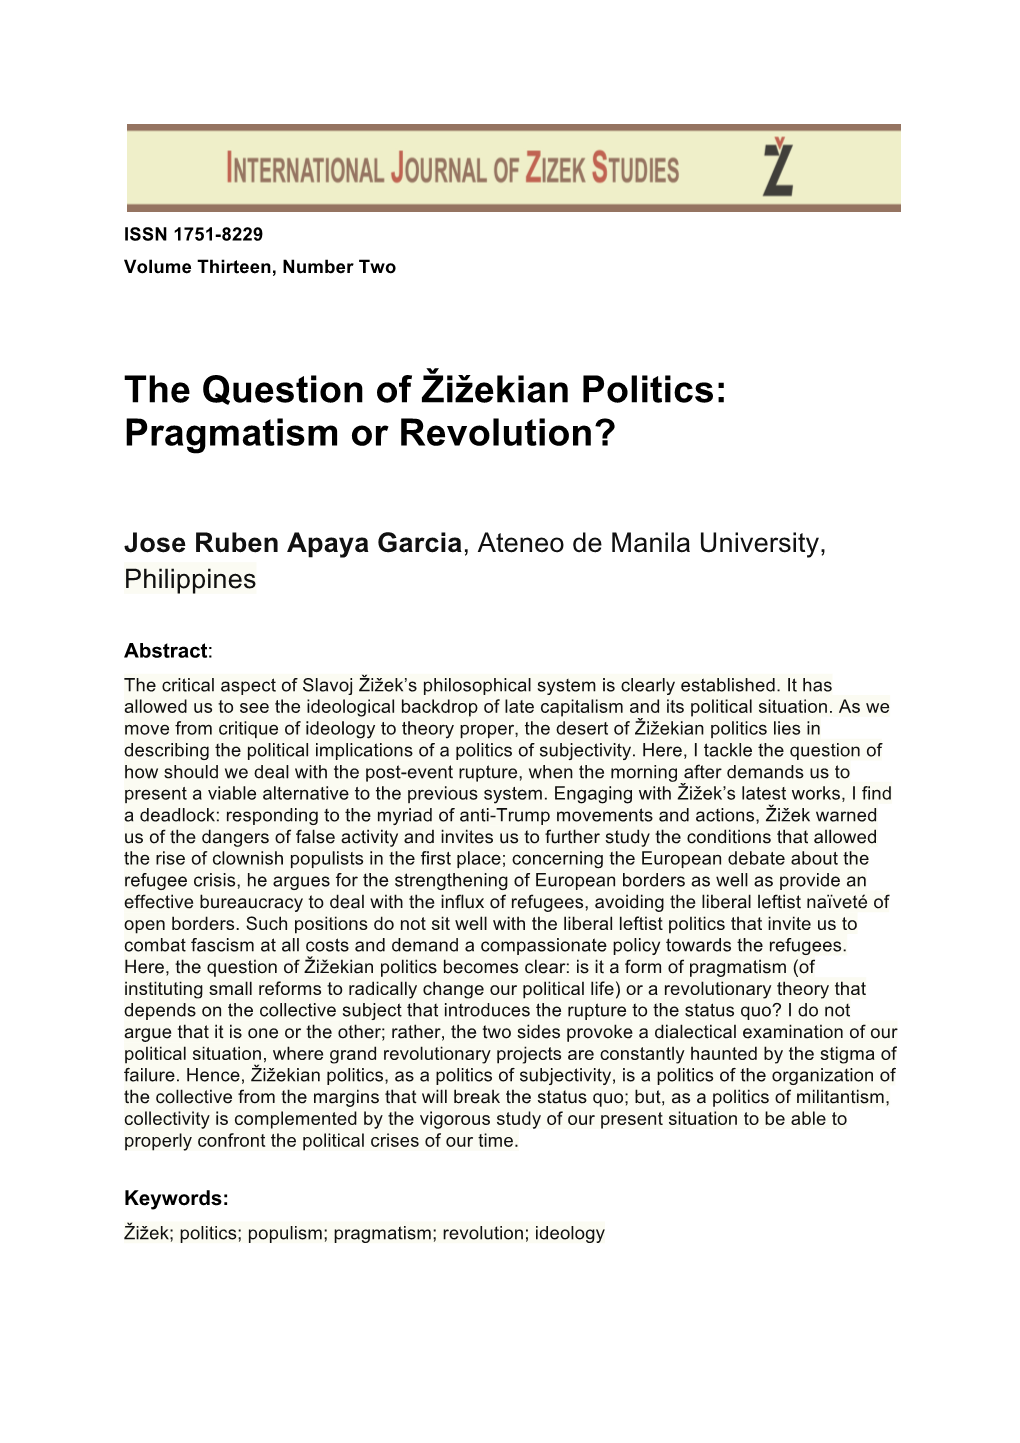 The Question of Žižekian Politics: Pragmatism Or Revolution?